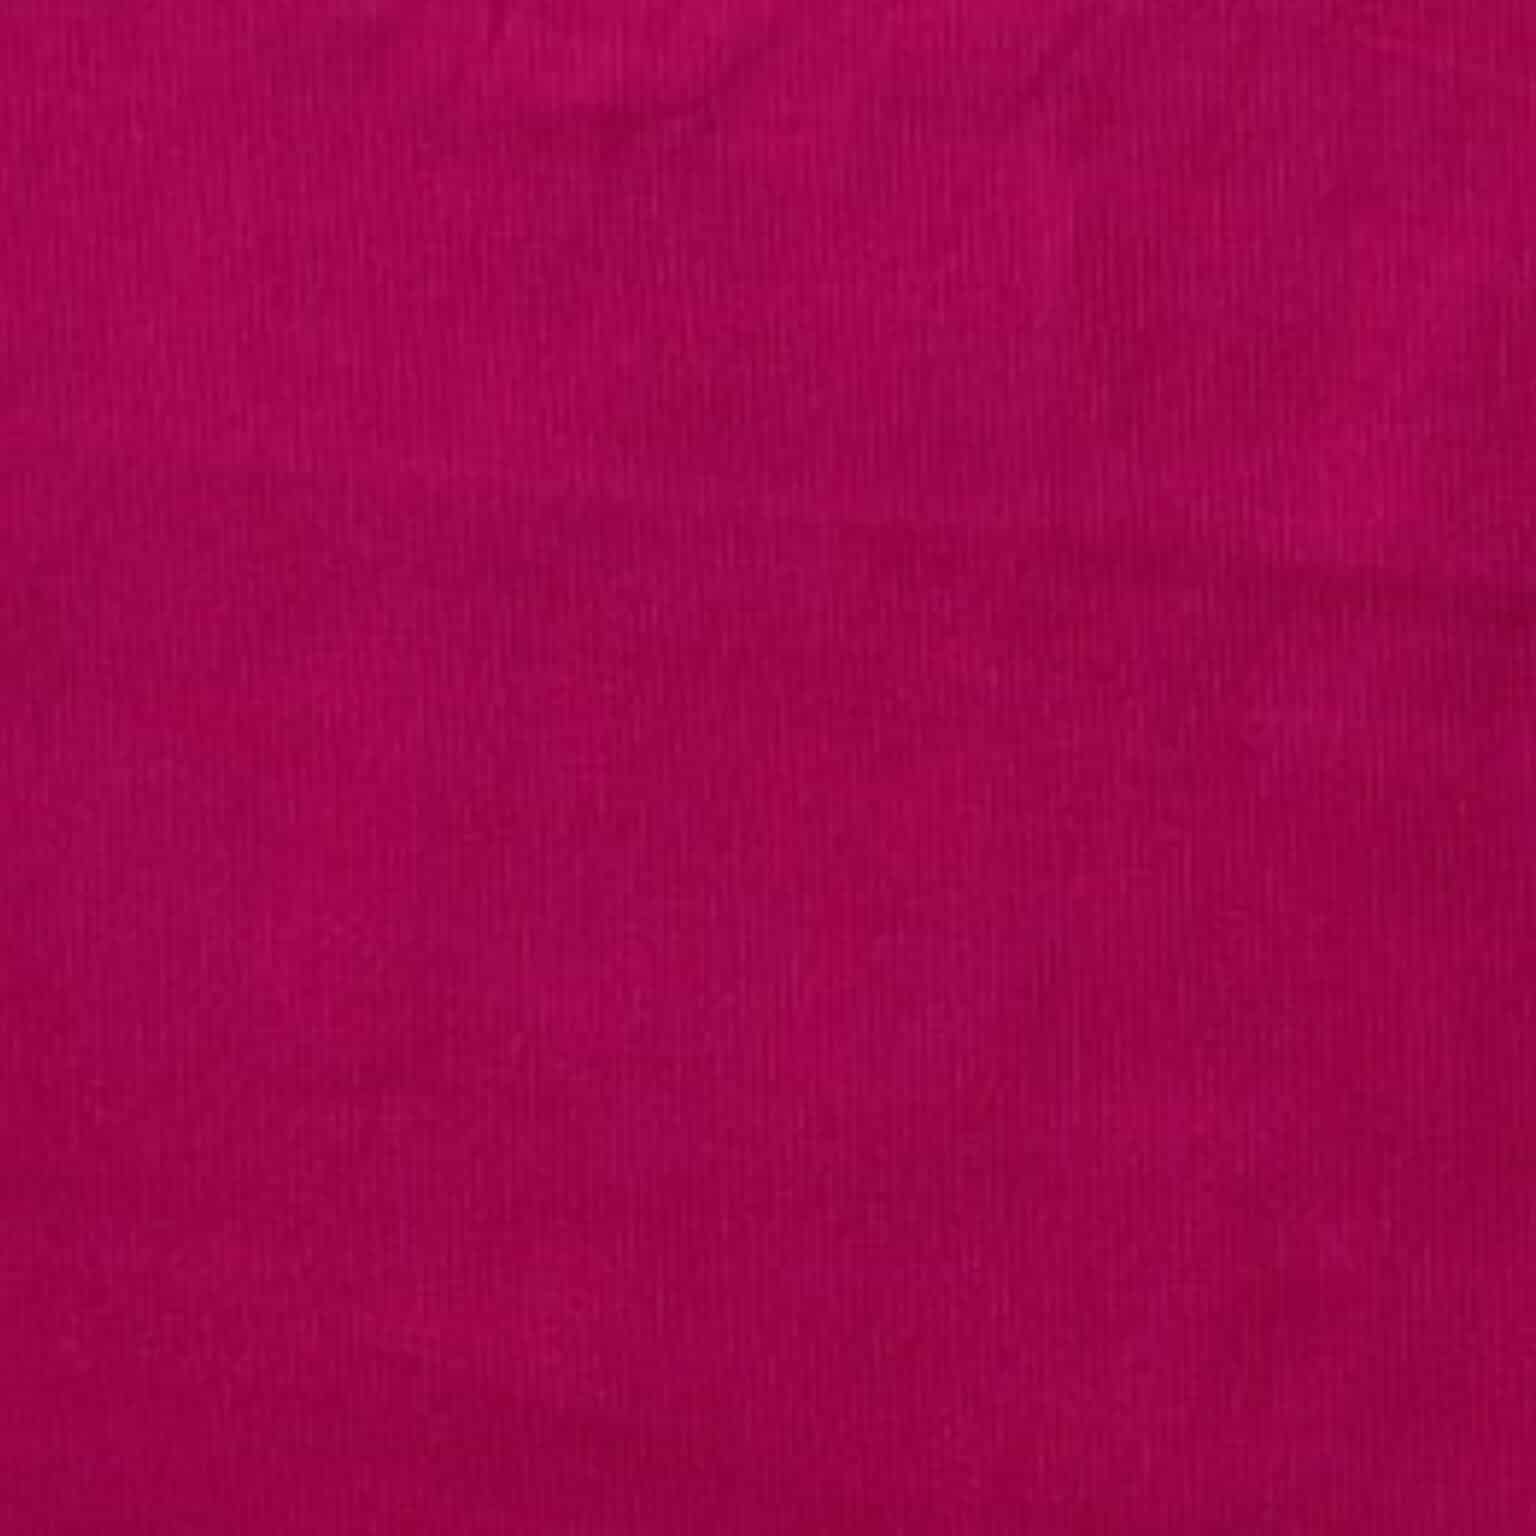 Babycord Corduroy Fabric – Fuchsia Pink Needlecord – 21 Wale – 140cm Wide